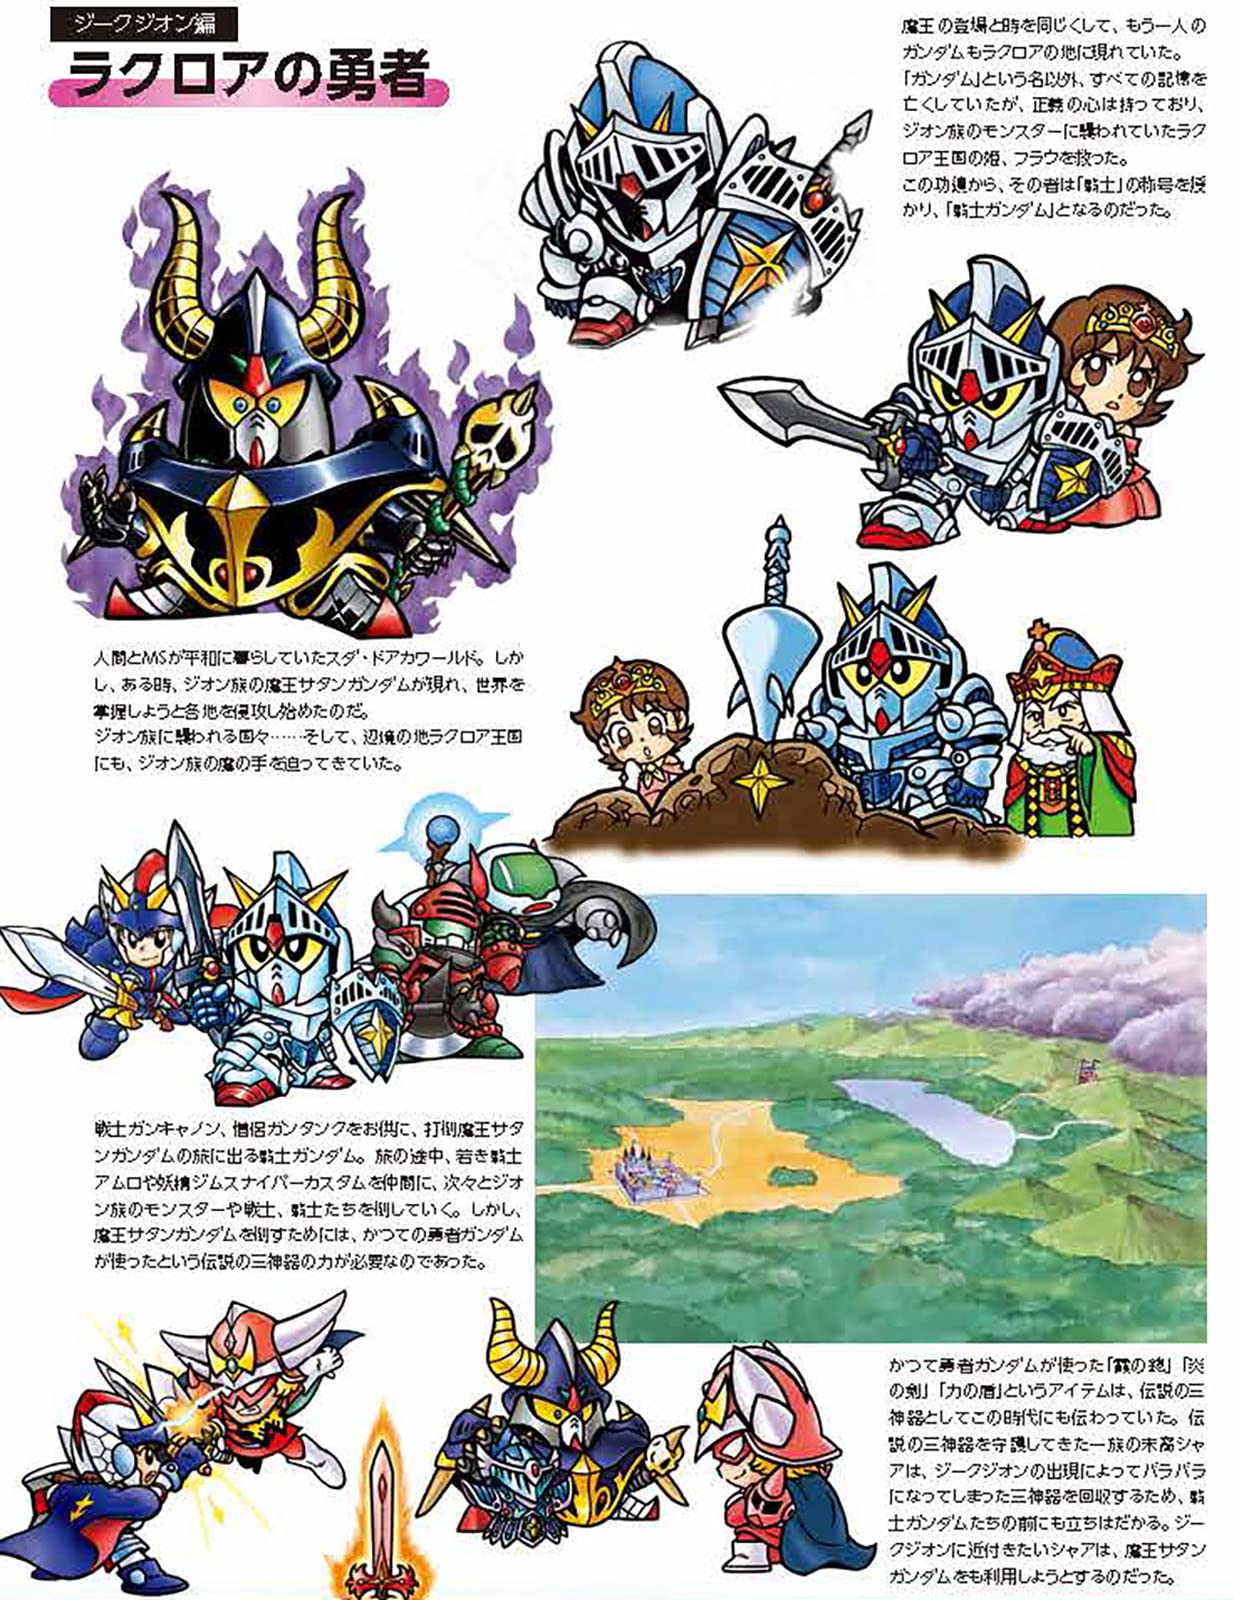 SD Gundam Historia